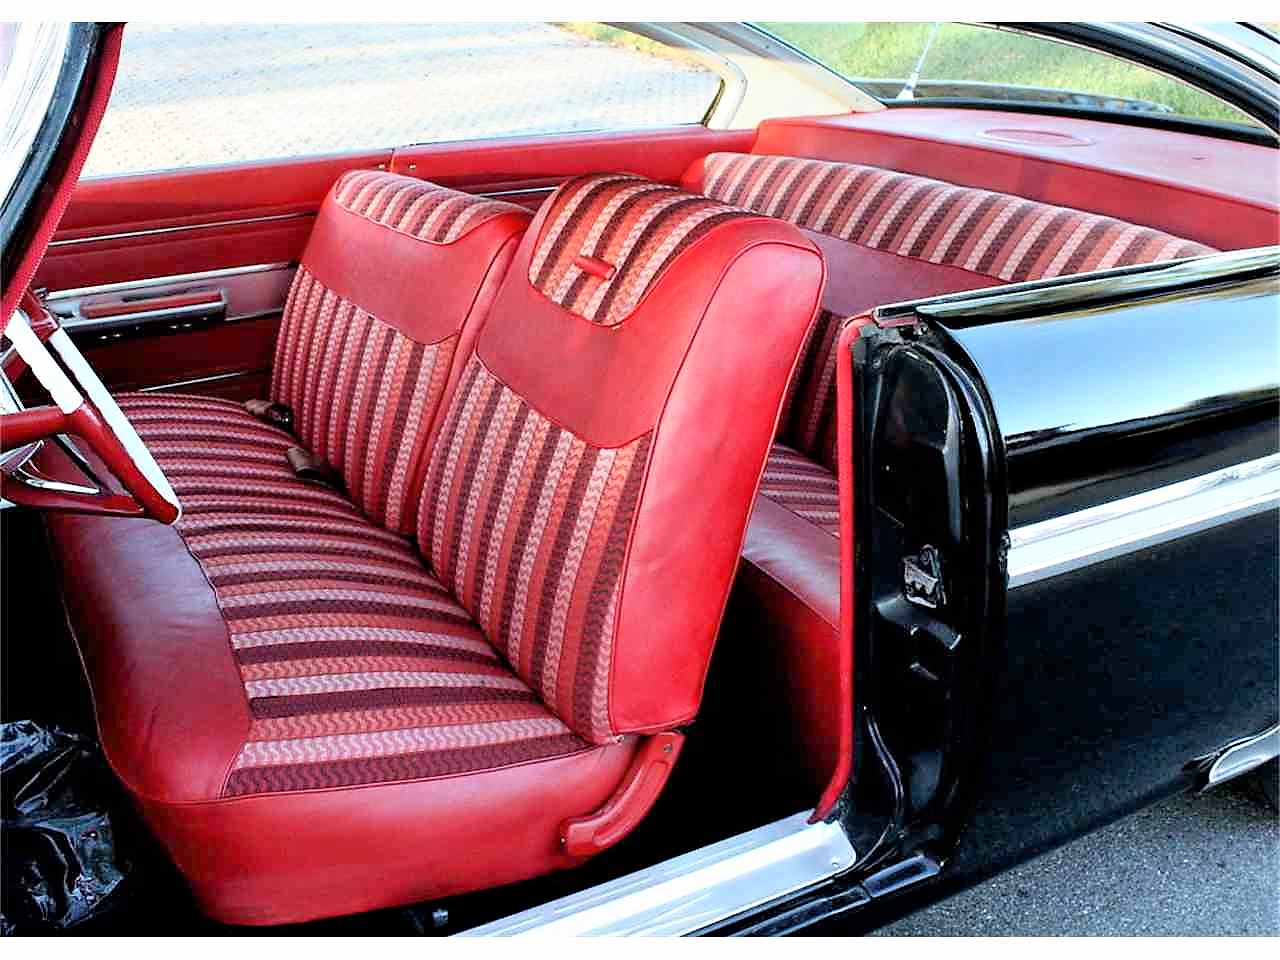 Full-size 1961 Dodge Dart hardtop | ClassicCars.com Journal